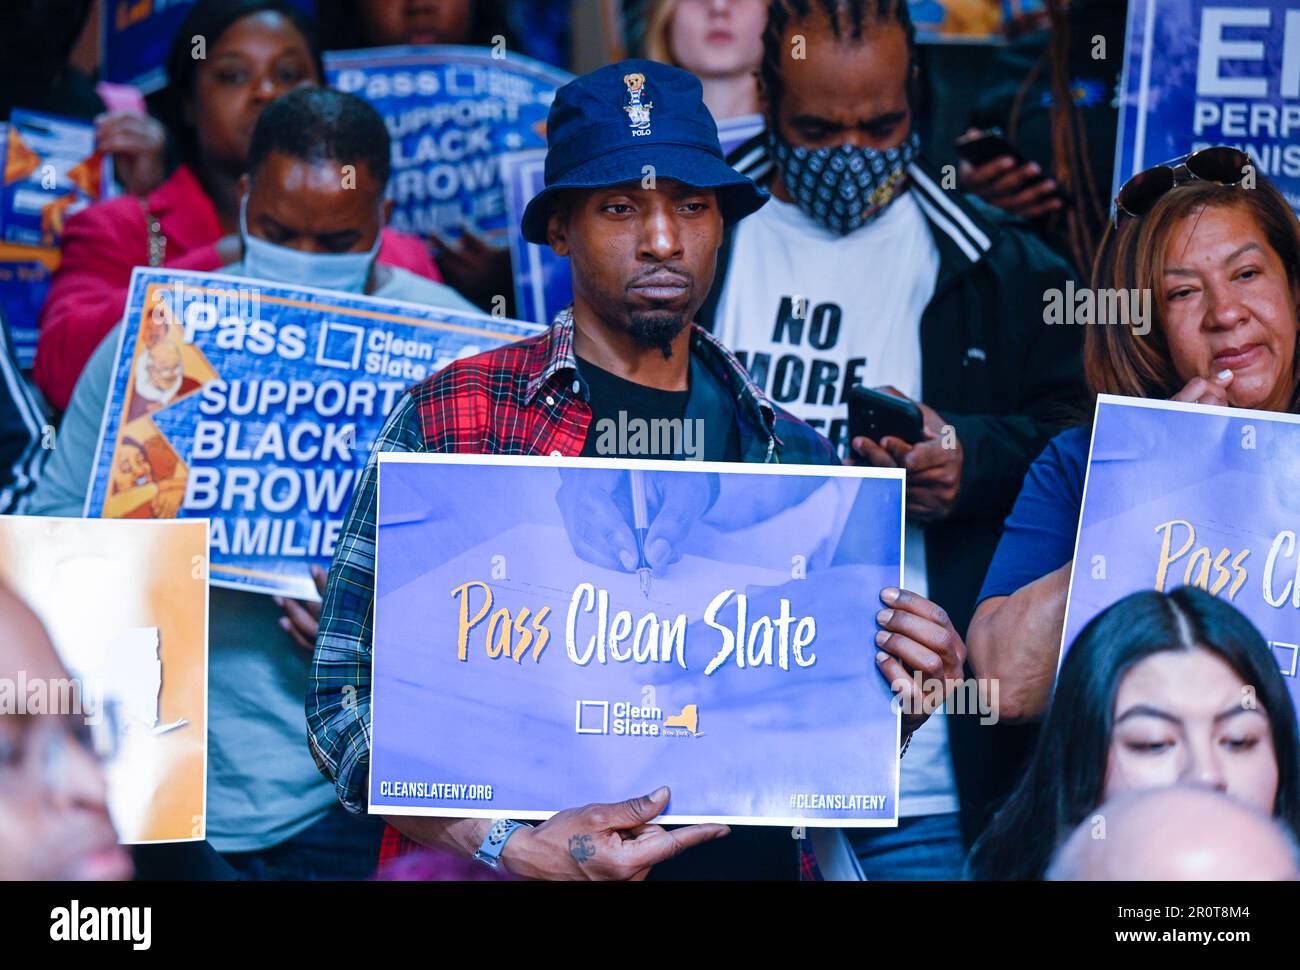 Clean Slate NY (@cleanslateny) / X